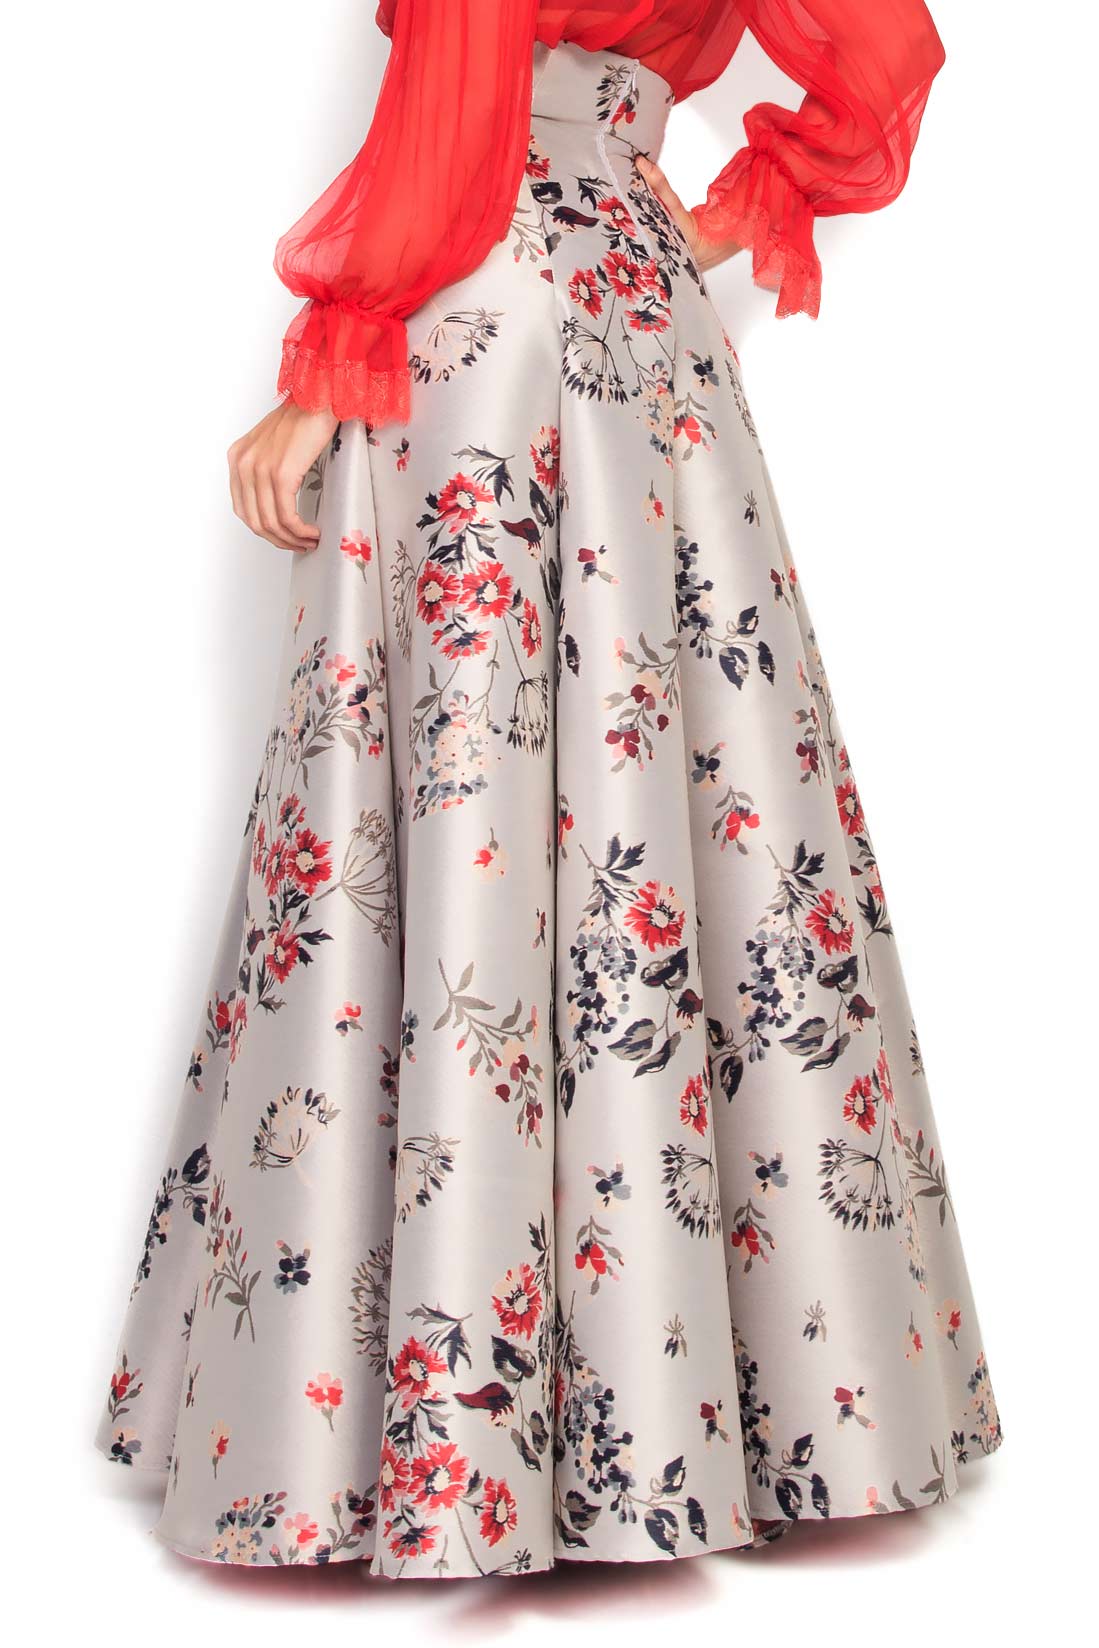 Floral-print jacquard maxi skirt Elena Perseil image 2